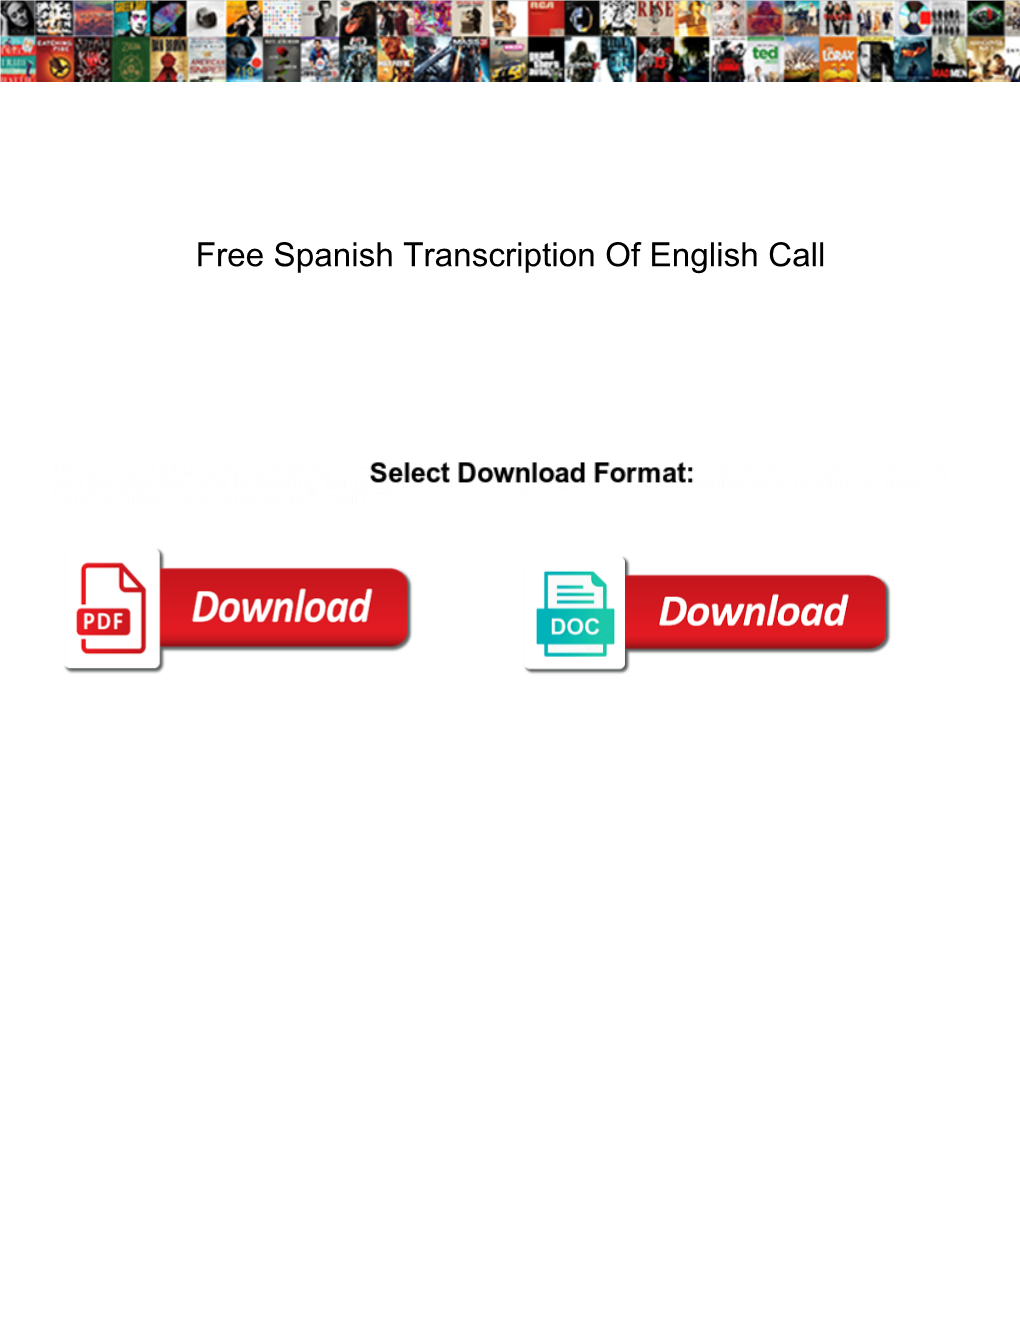 Free Spanish Transcription of English Call